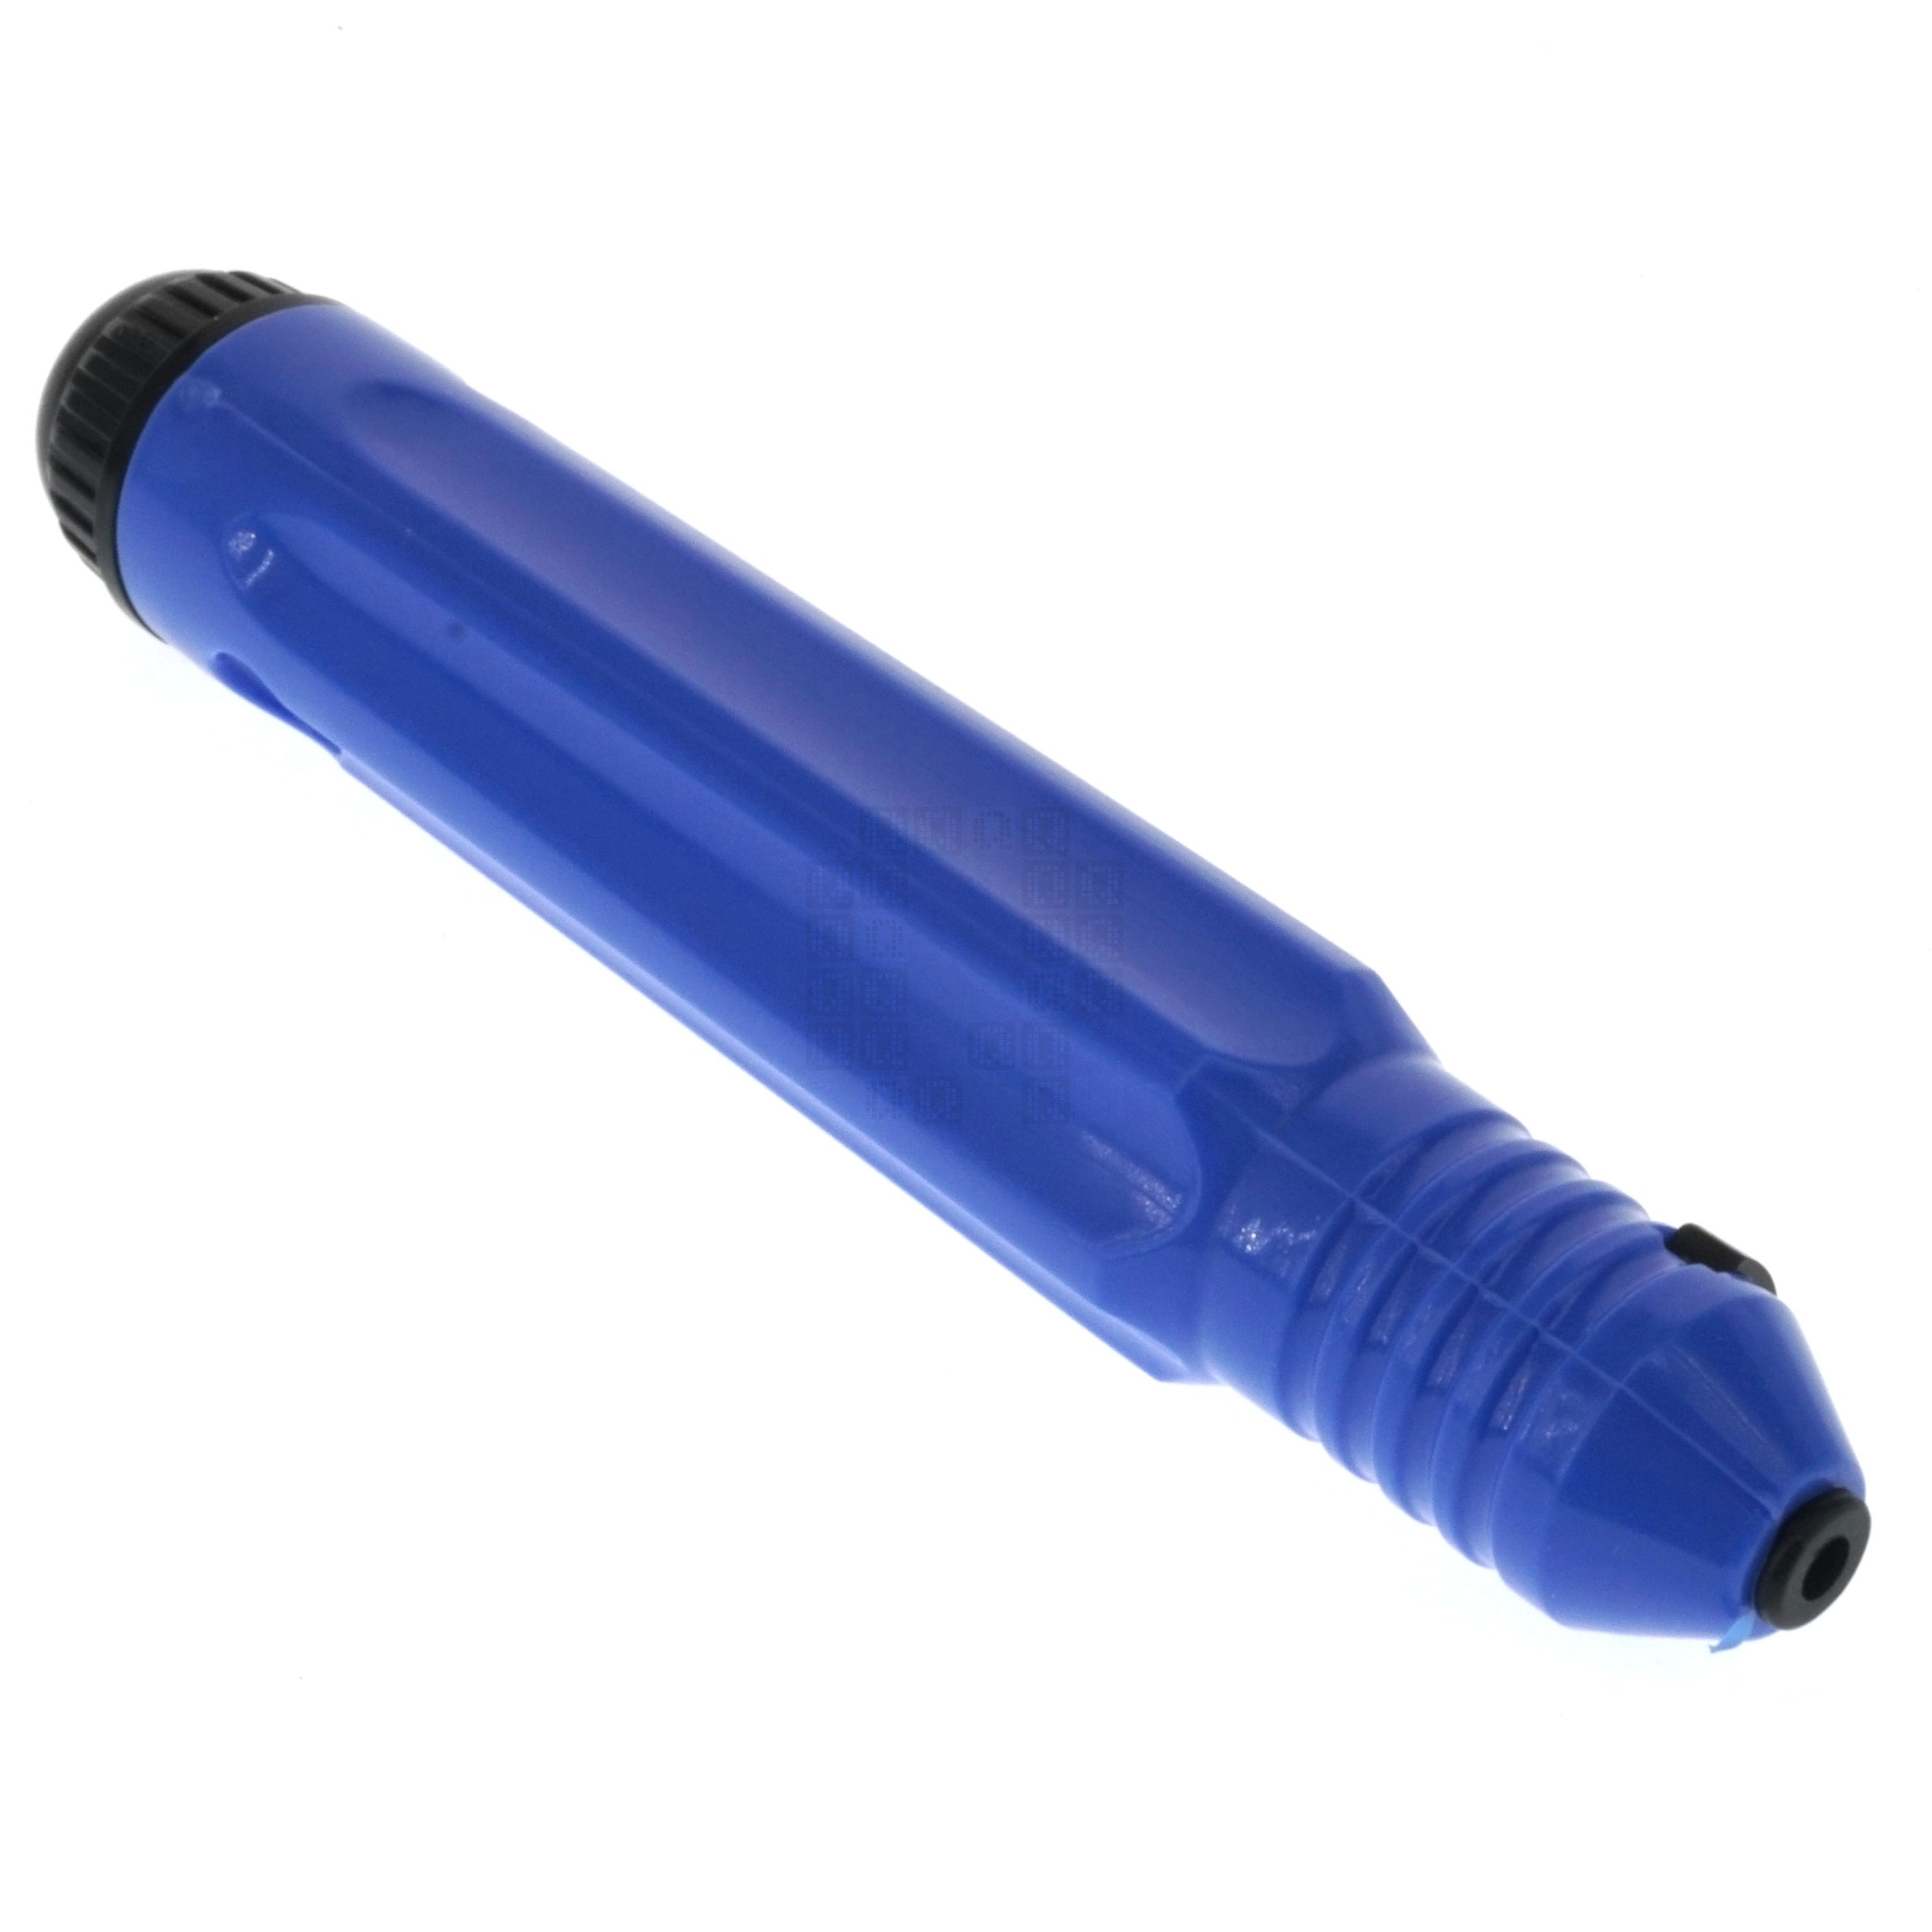 NB1100 Plastic Handle Deburring Tool, Blue